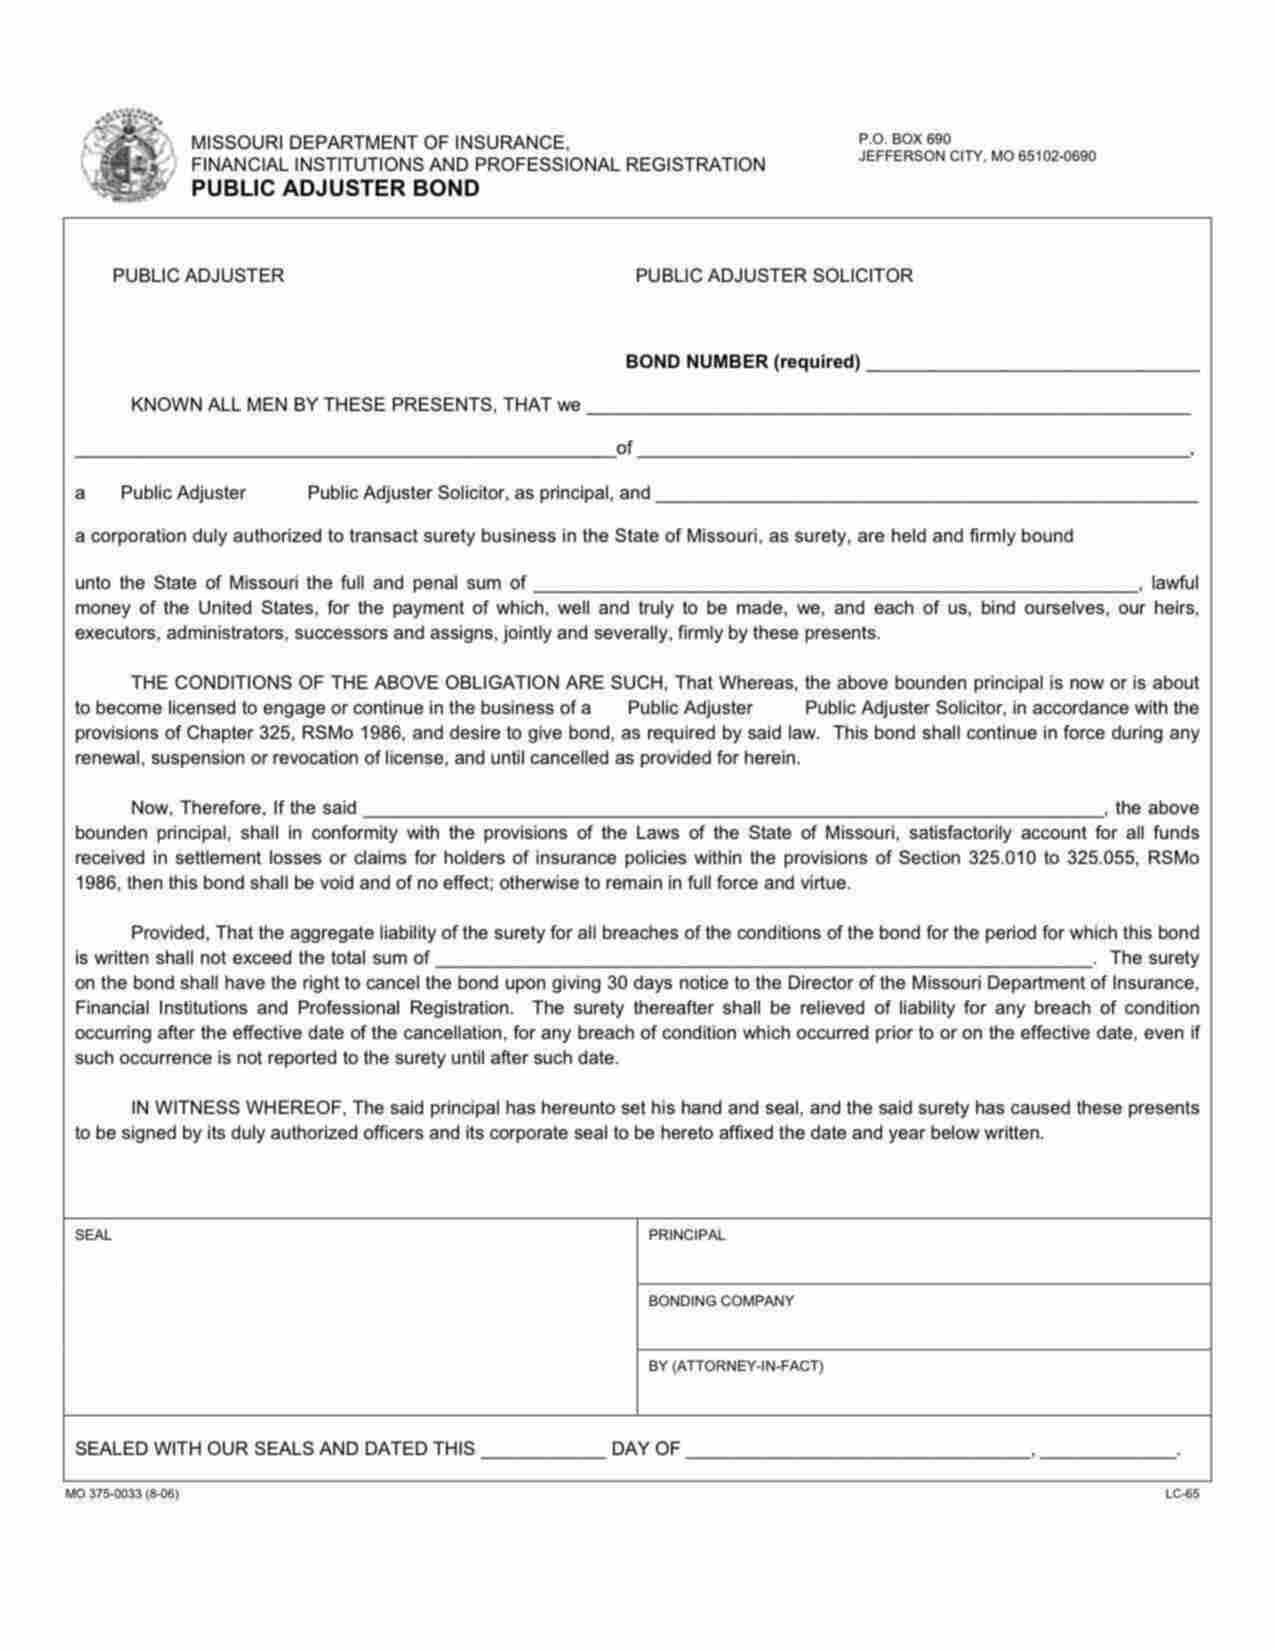 Missouri Public Adjuster Solicitor Bond Form